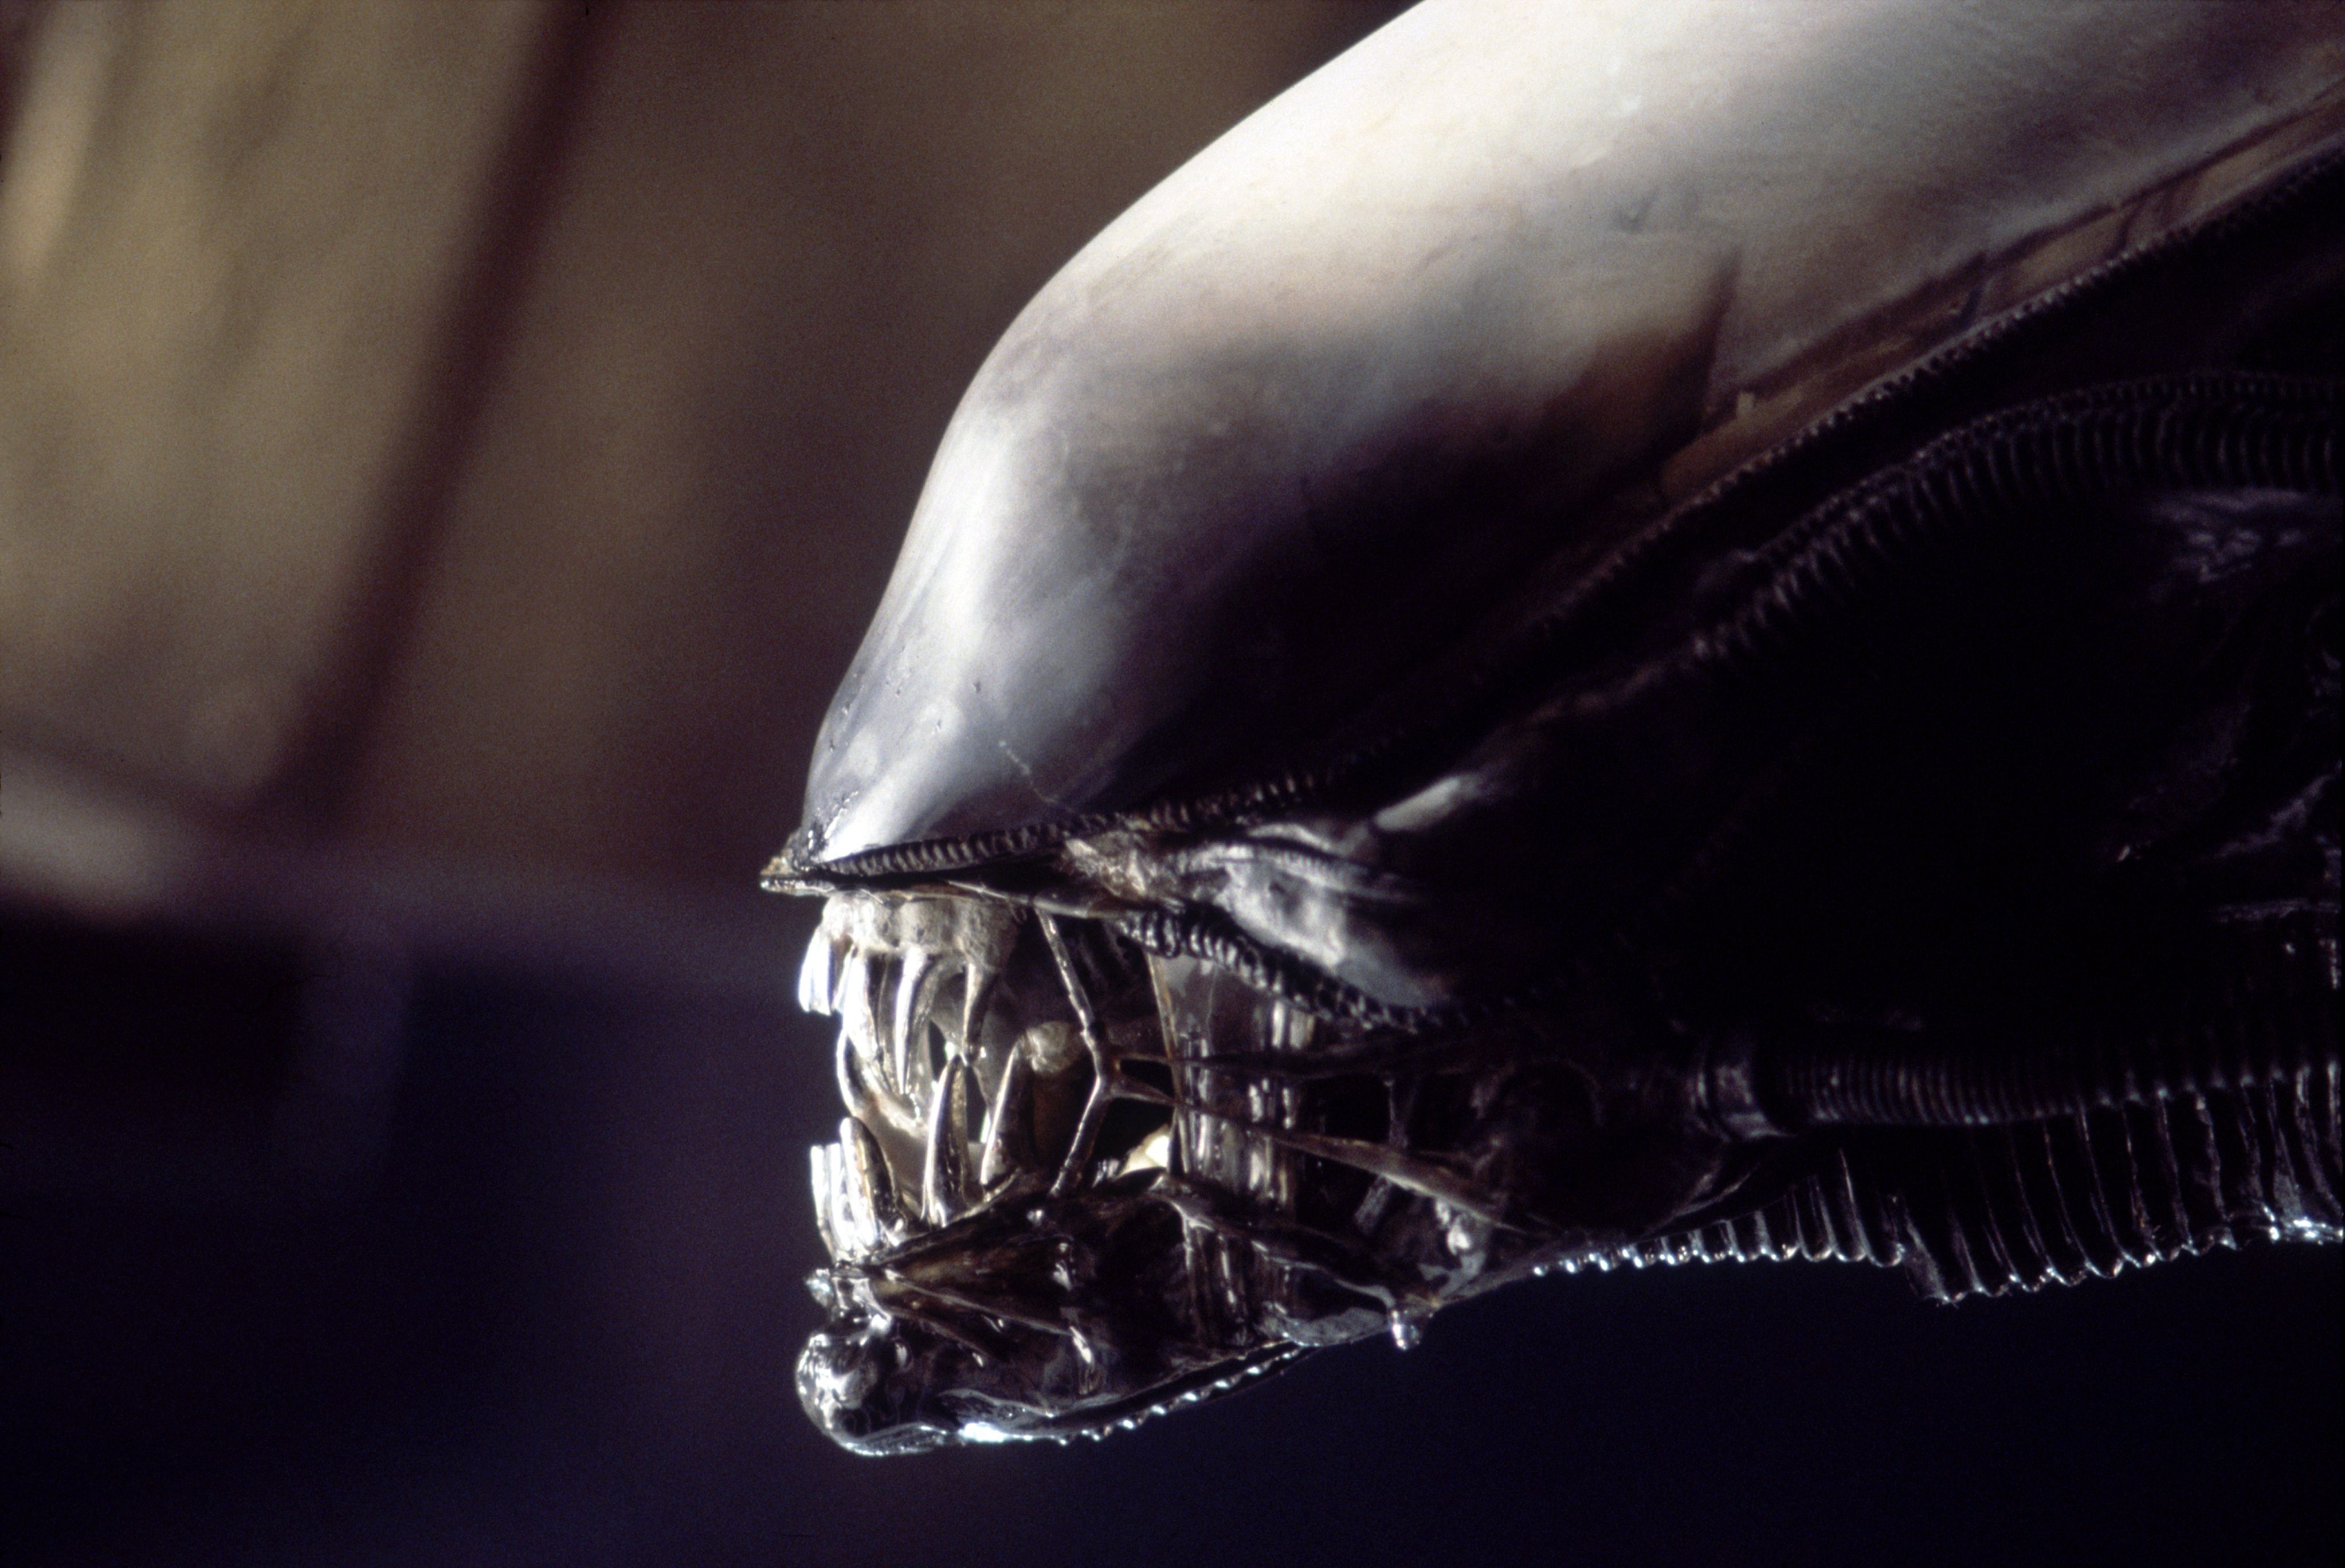 aliens-movie-image